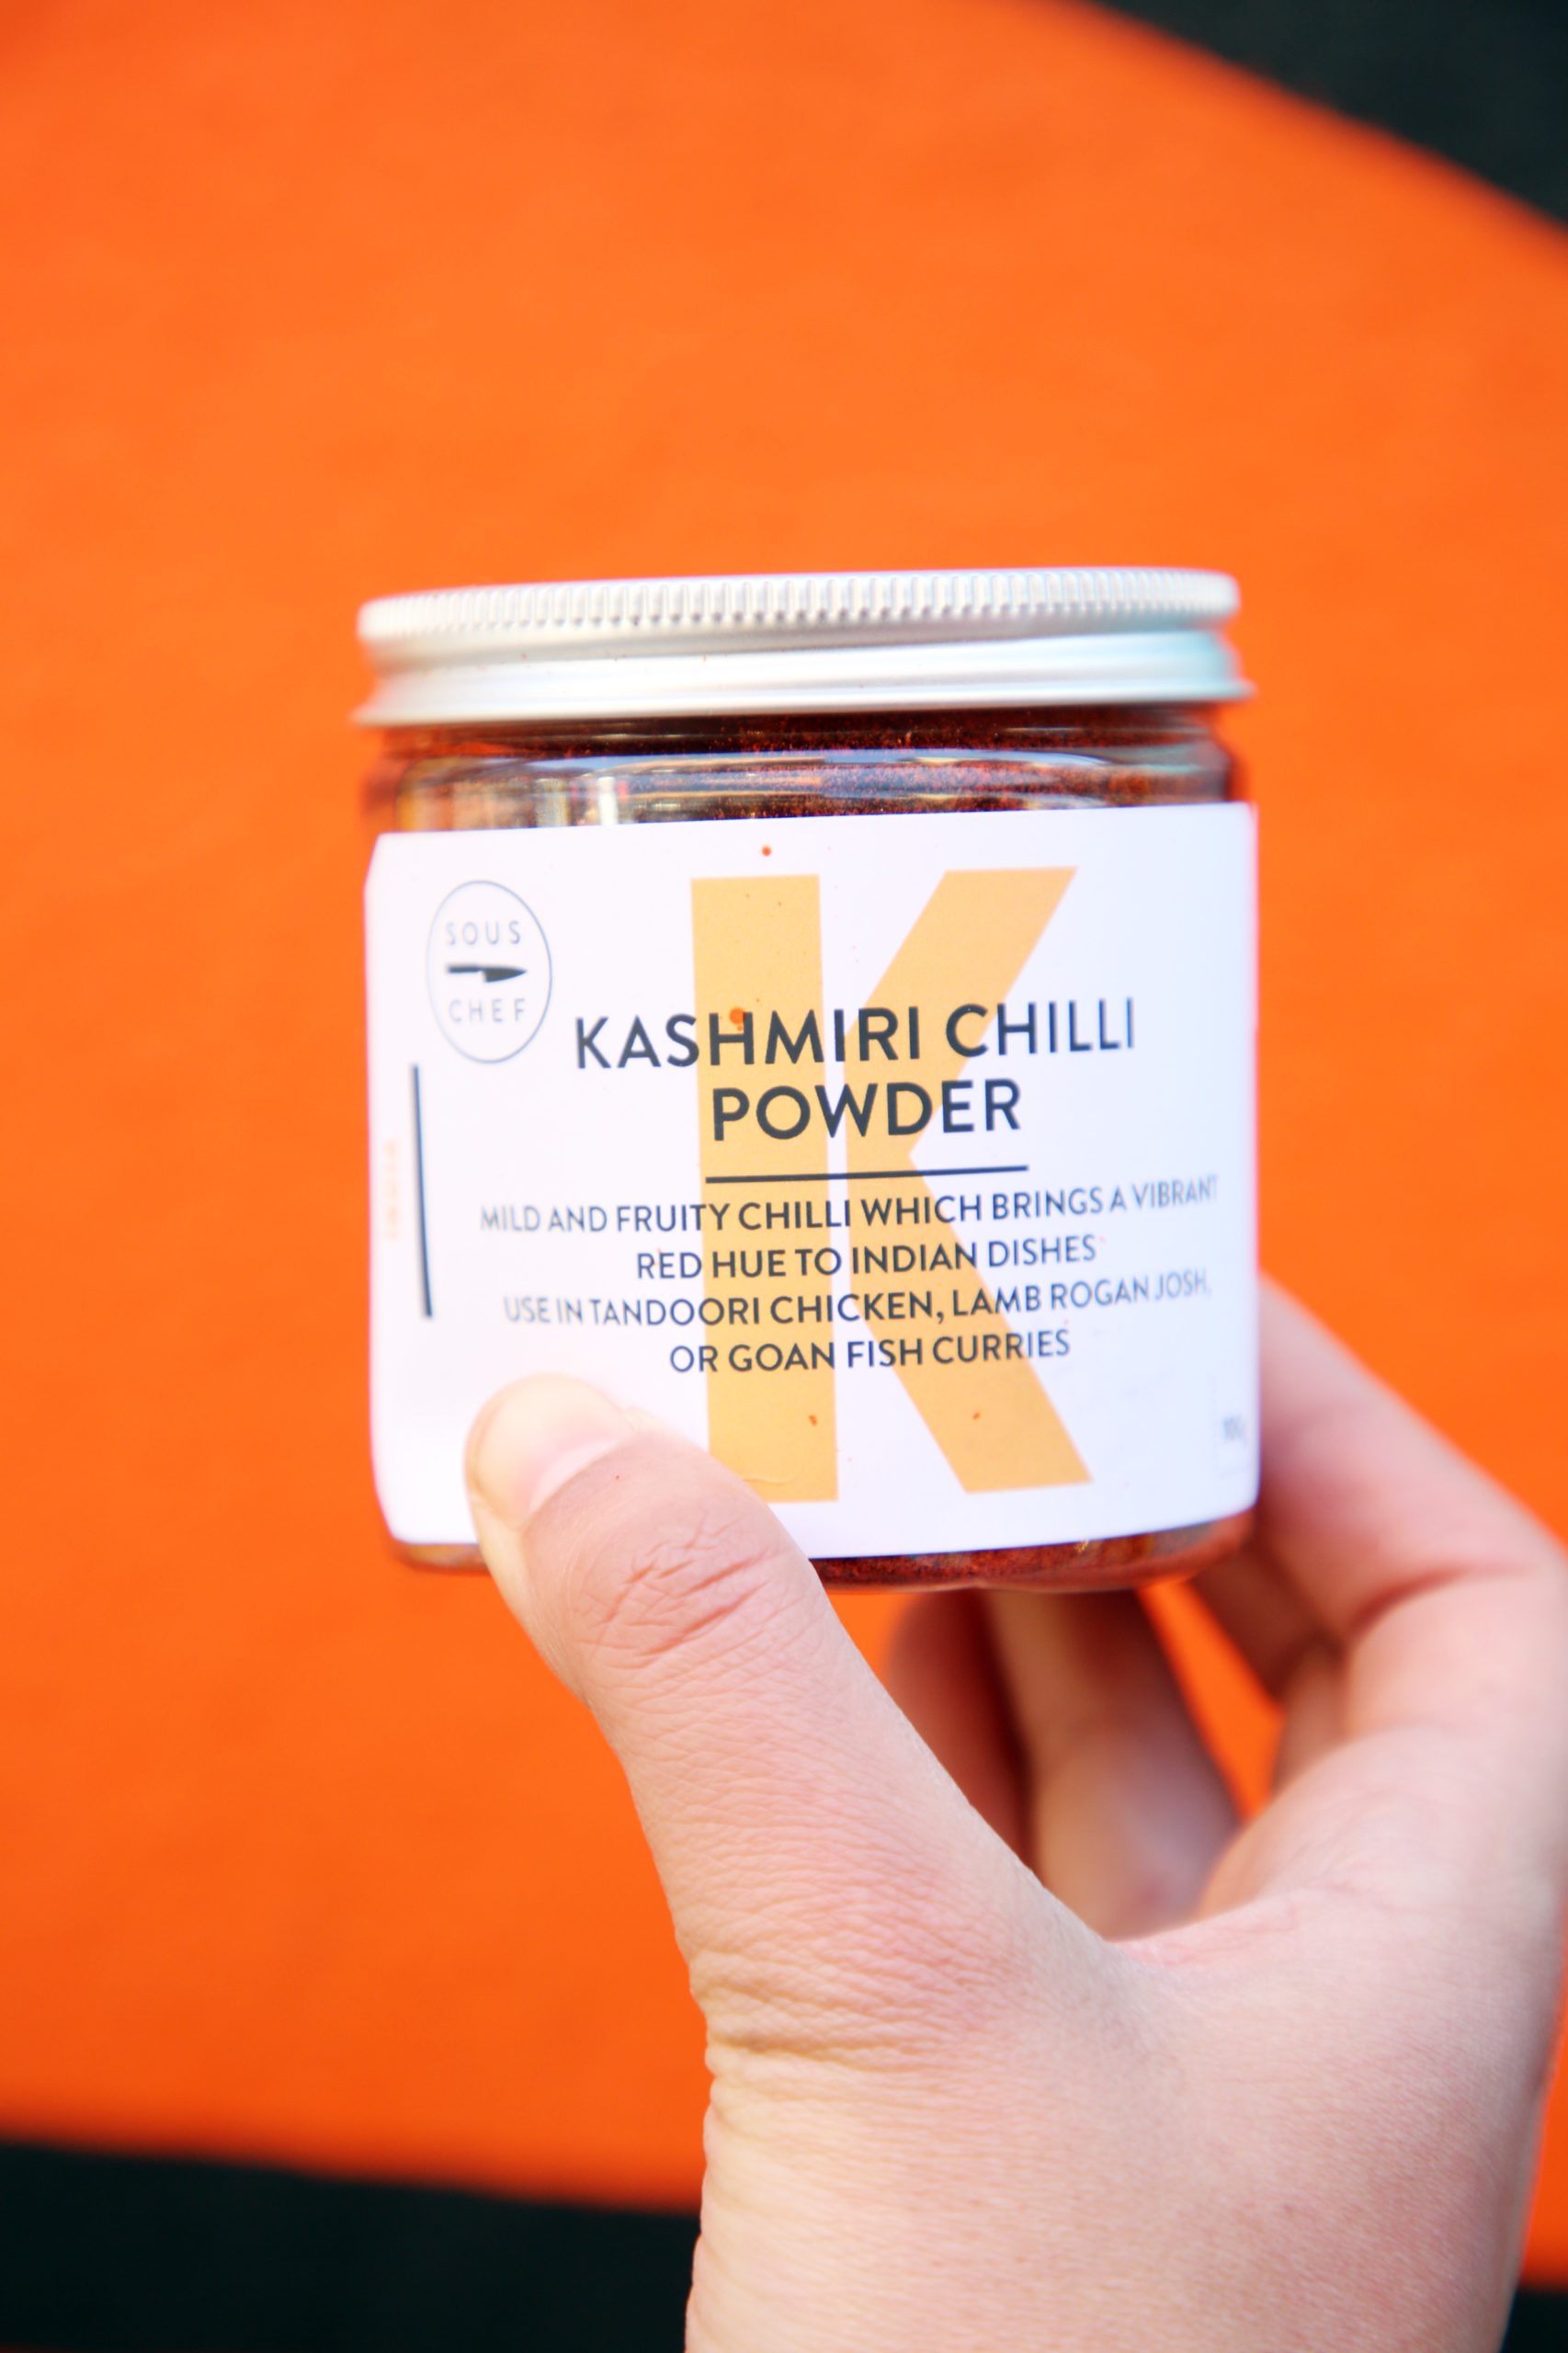 <img src="kashmiri.jpg" alt="kashmiri chilli powder"/> 